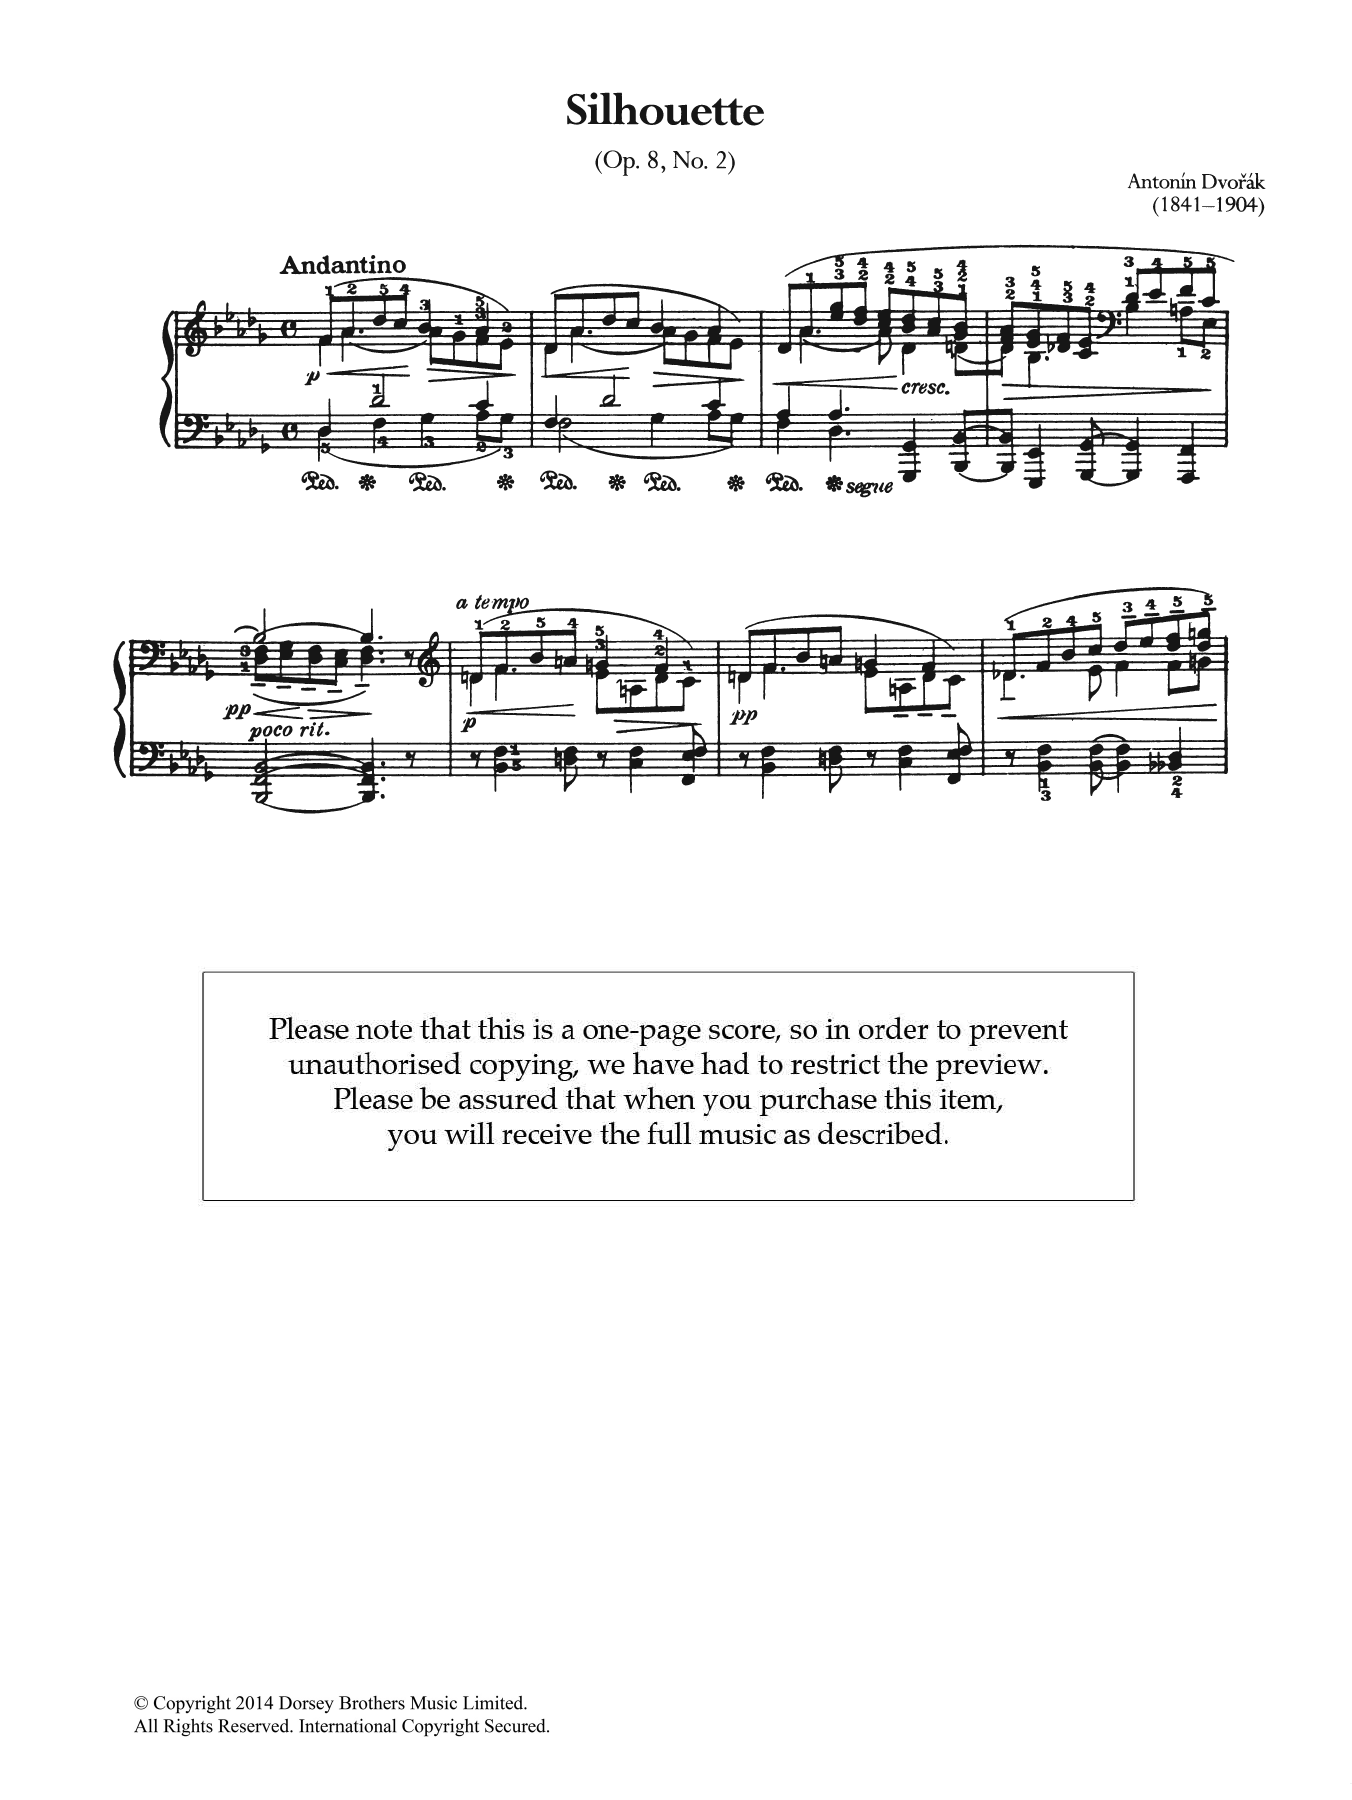 Download Antonin Dvorak Silhouette, Op.8 No.2 Sheet Music